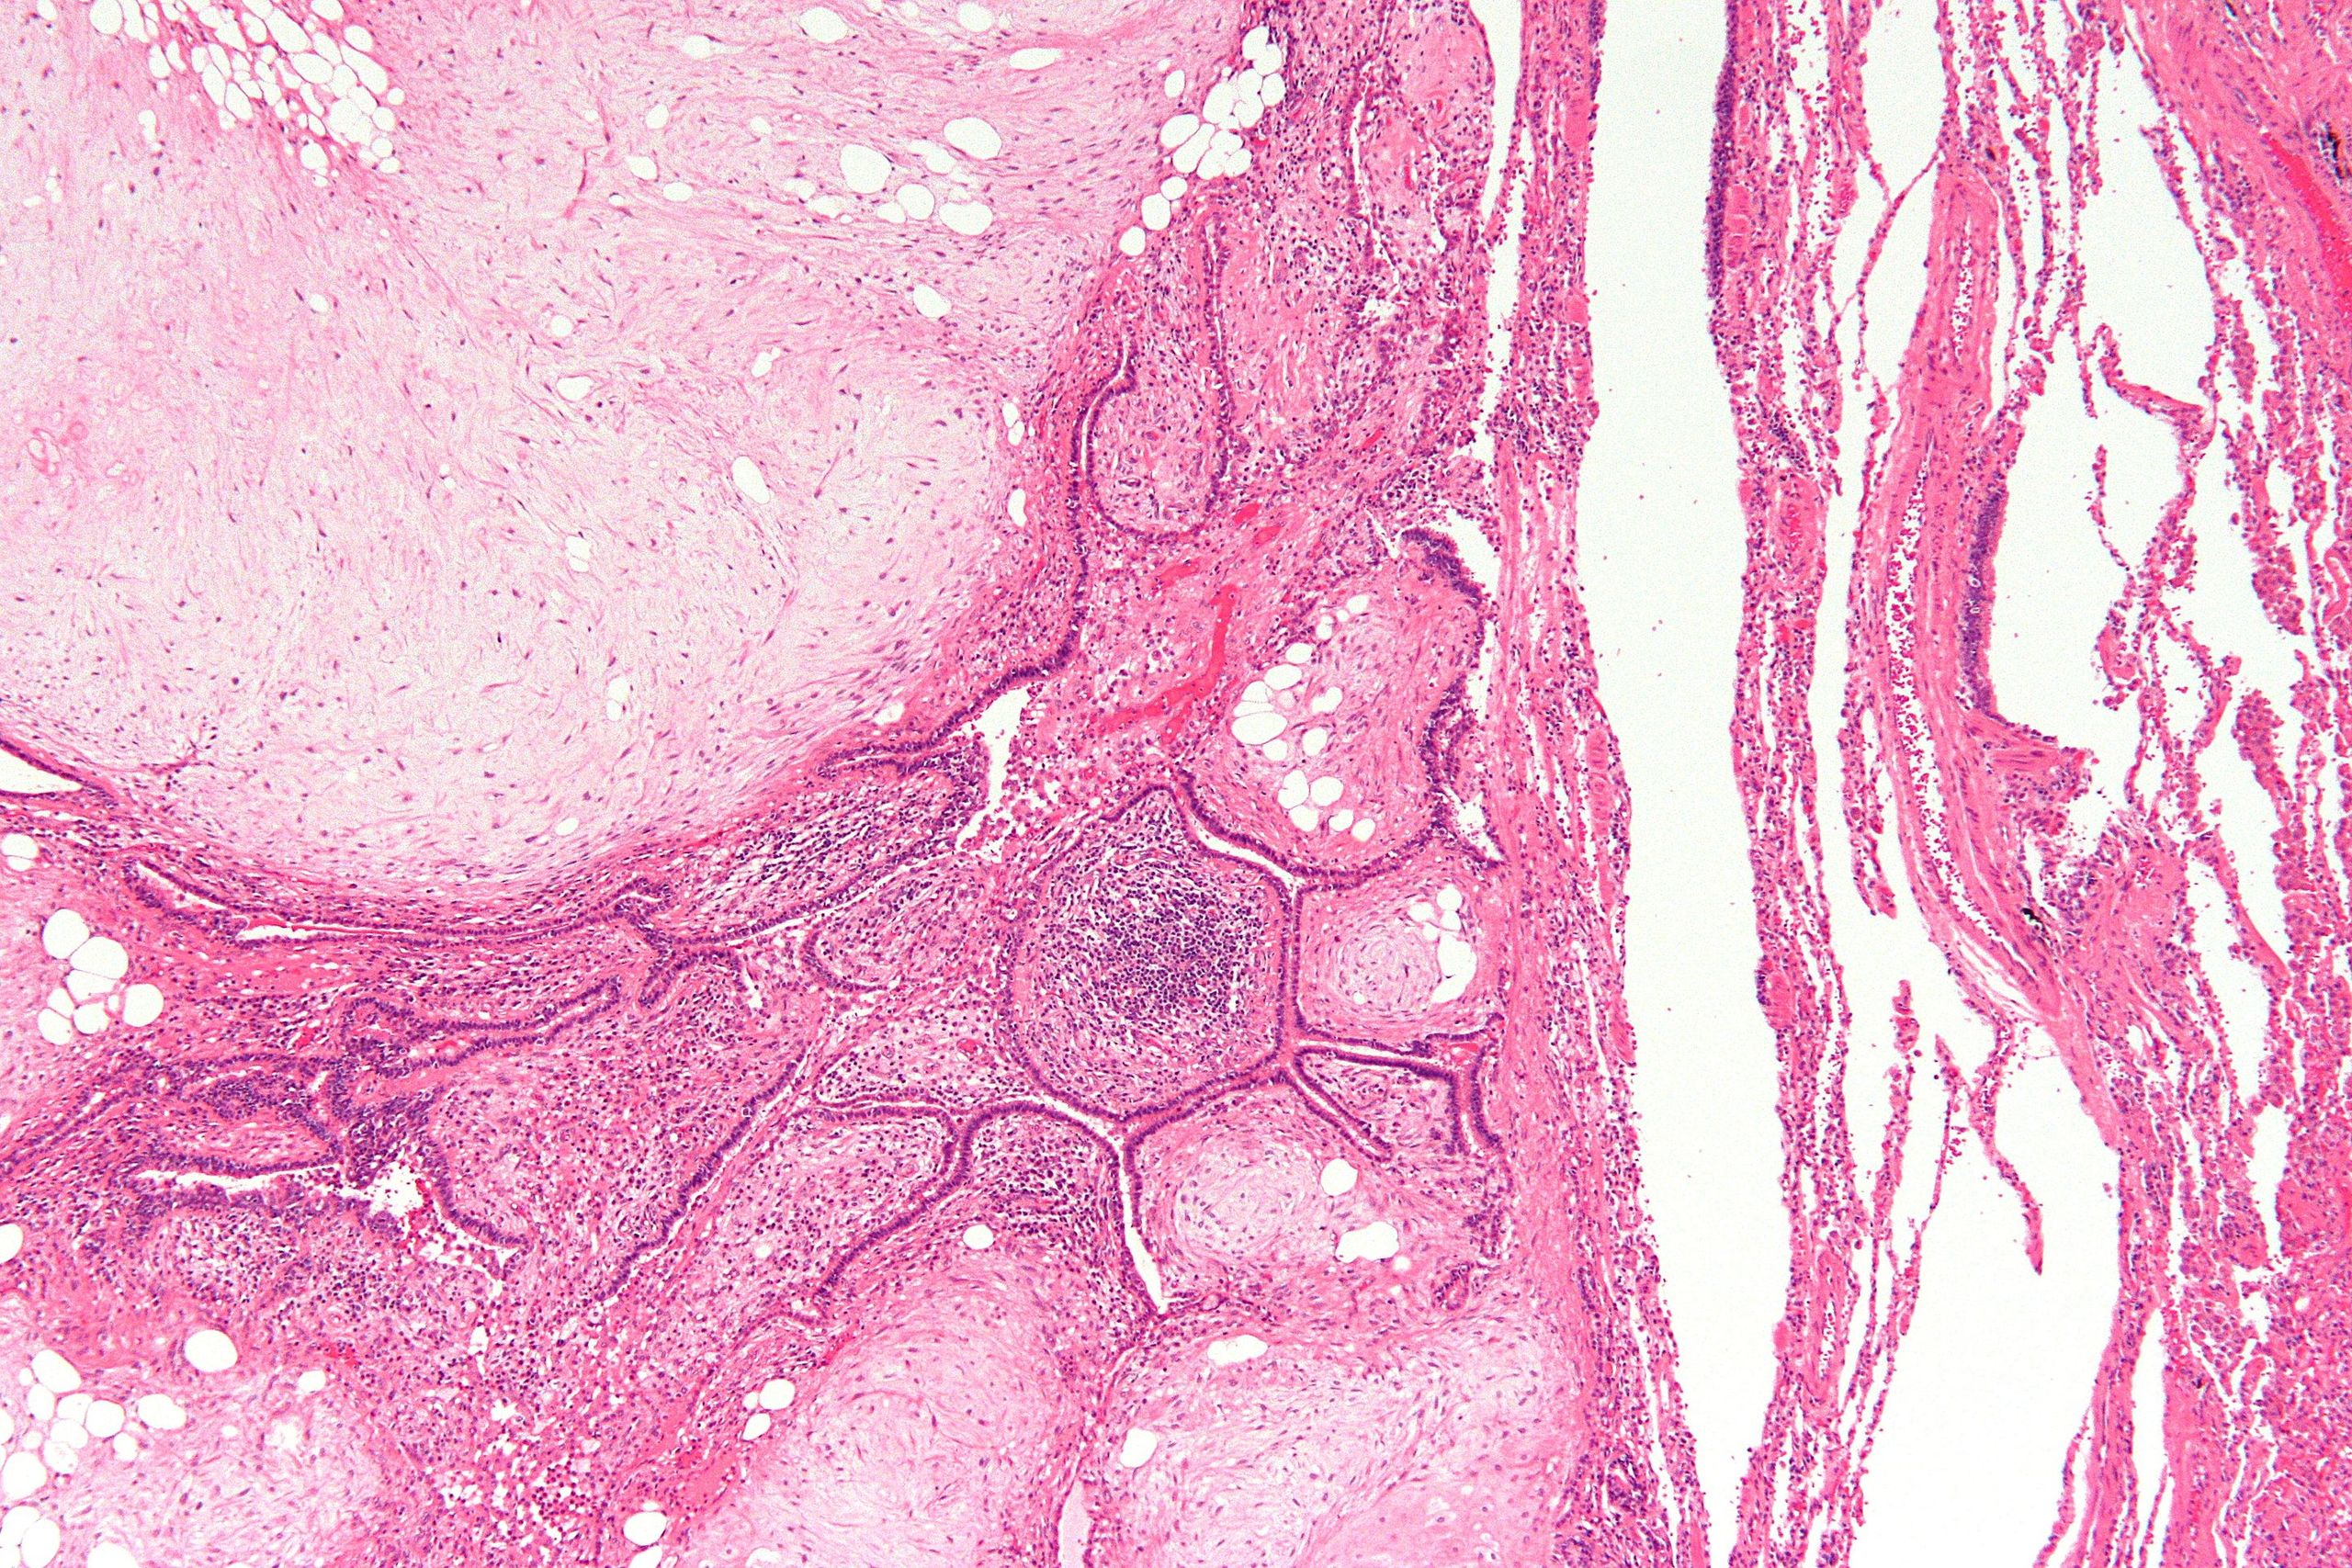 Low magnification micrograph of a pulmonary hamartoma. H&E stain.[8]